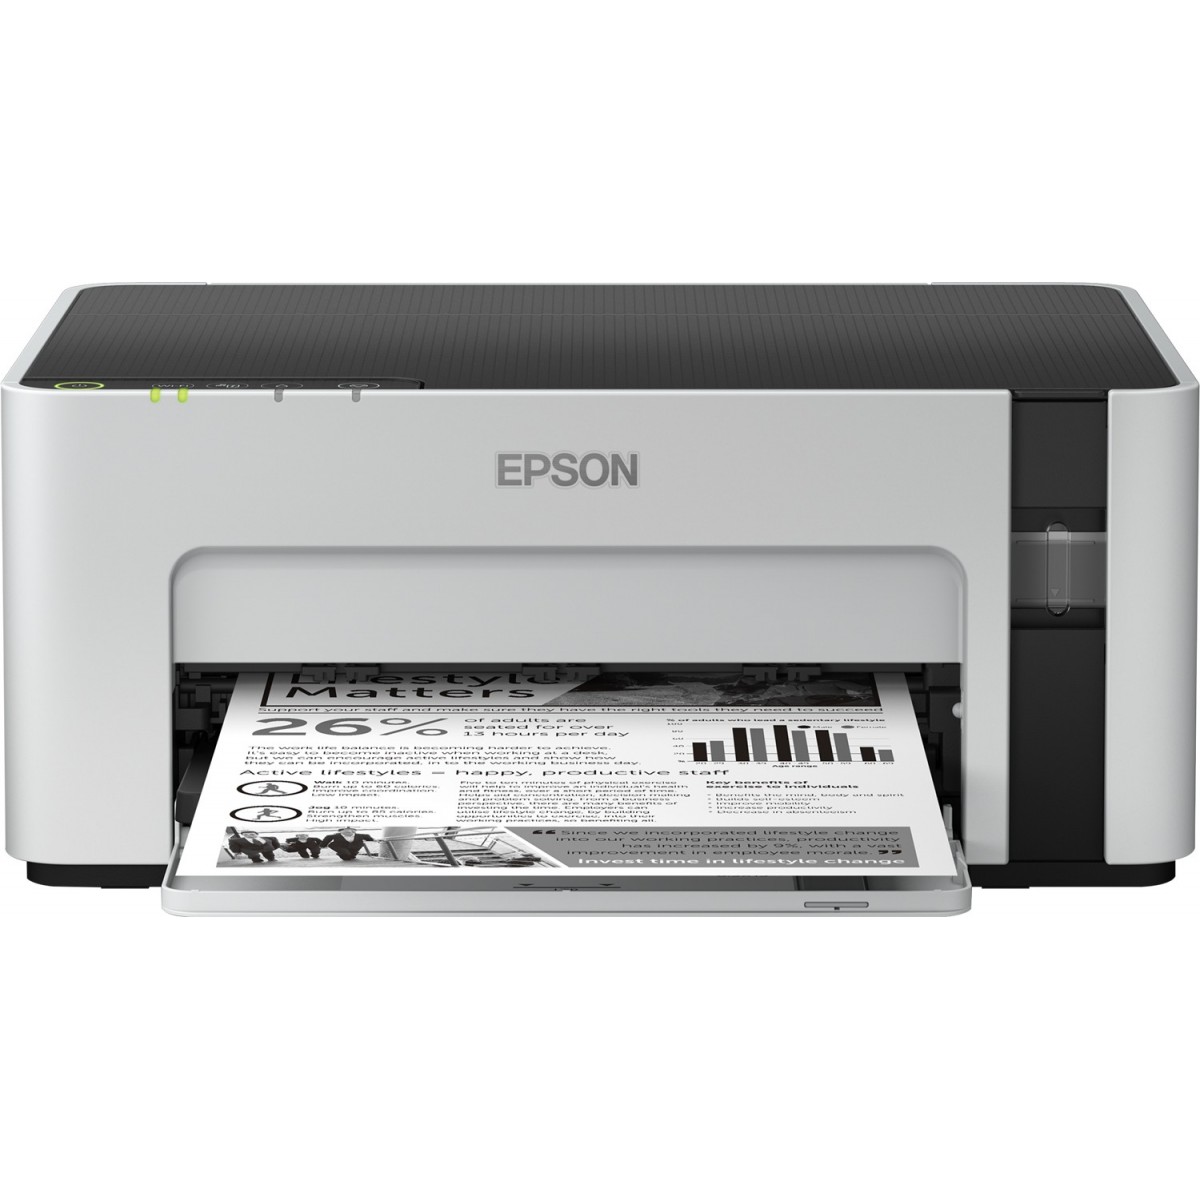 Epson EcoTank M1120 - 1440 x 720 DPI - 1 - A4 - 15000 pages per month - 32 ppm - Black - White